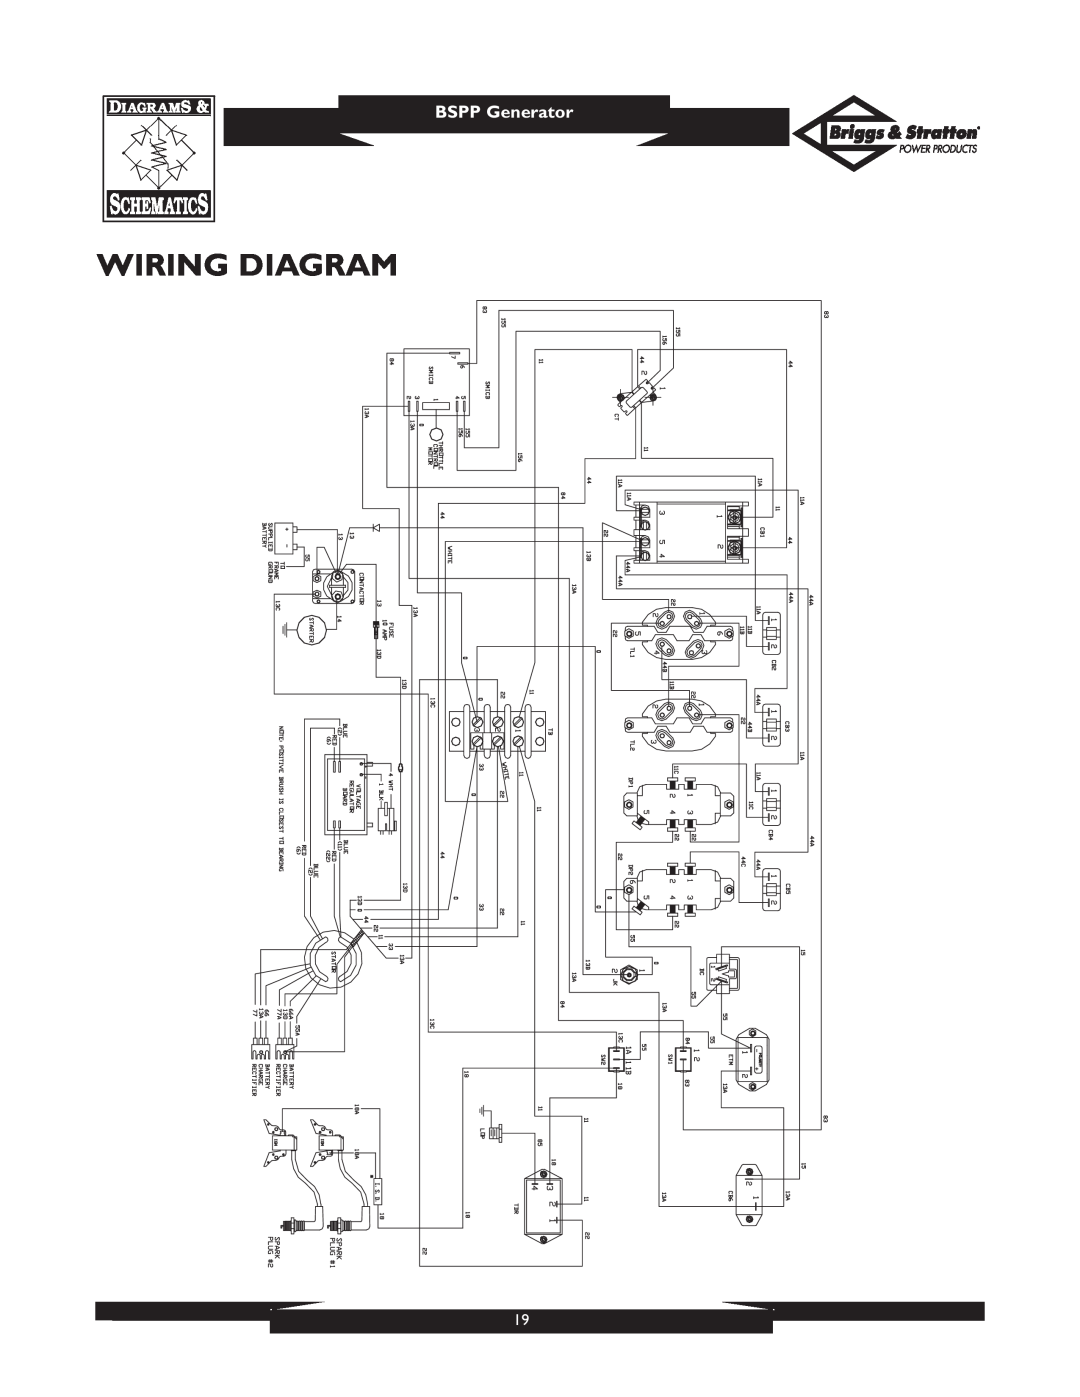 Briggs & Stratton PRO8000 owner manual Wiring Diagram, BSPP Generator 